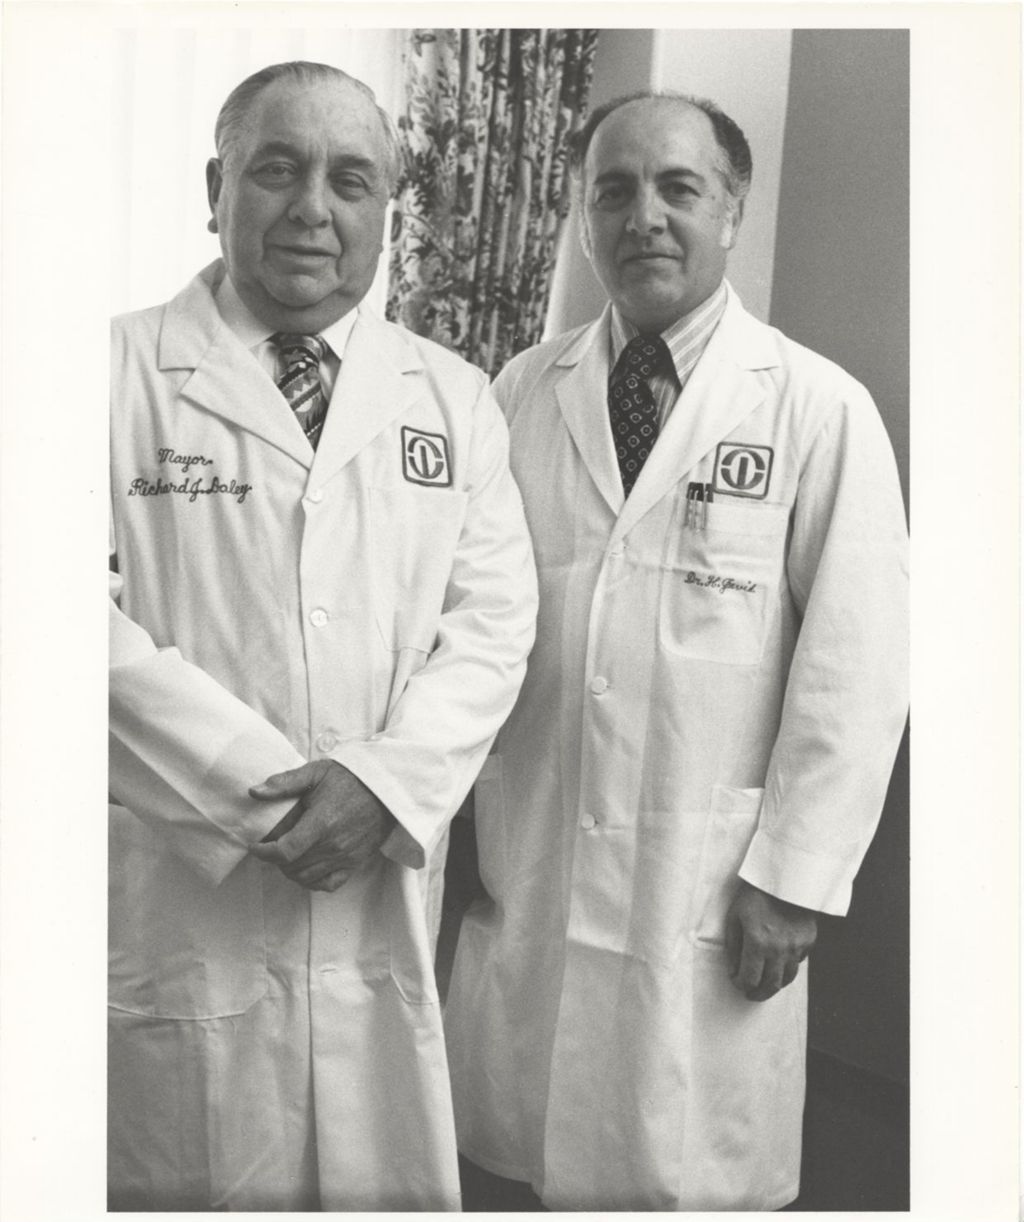 Miniature of Richard J. Daley with Doctor Javid at Rush-Presbyterian-St. Luke's Medical Center